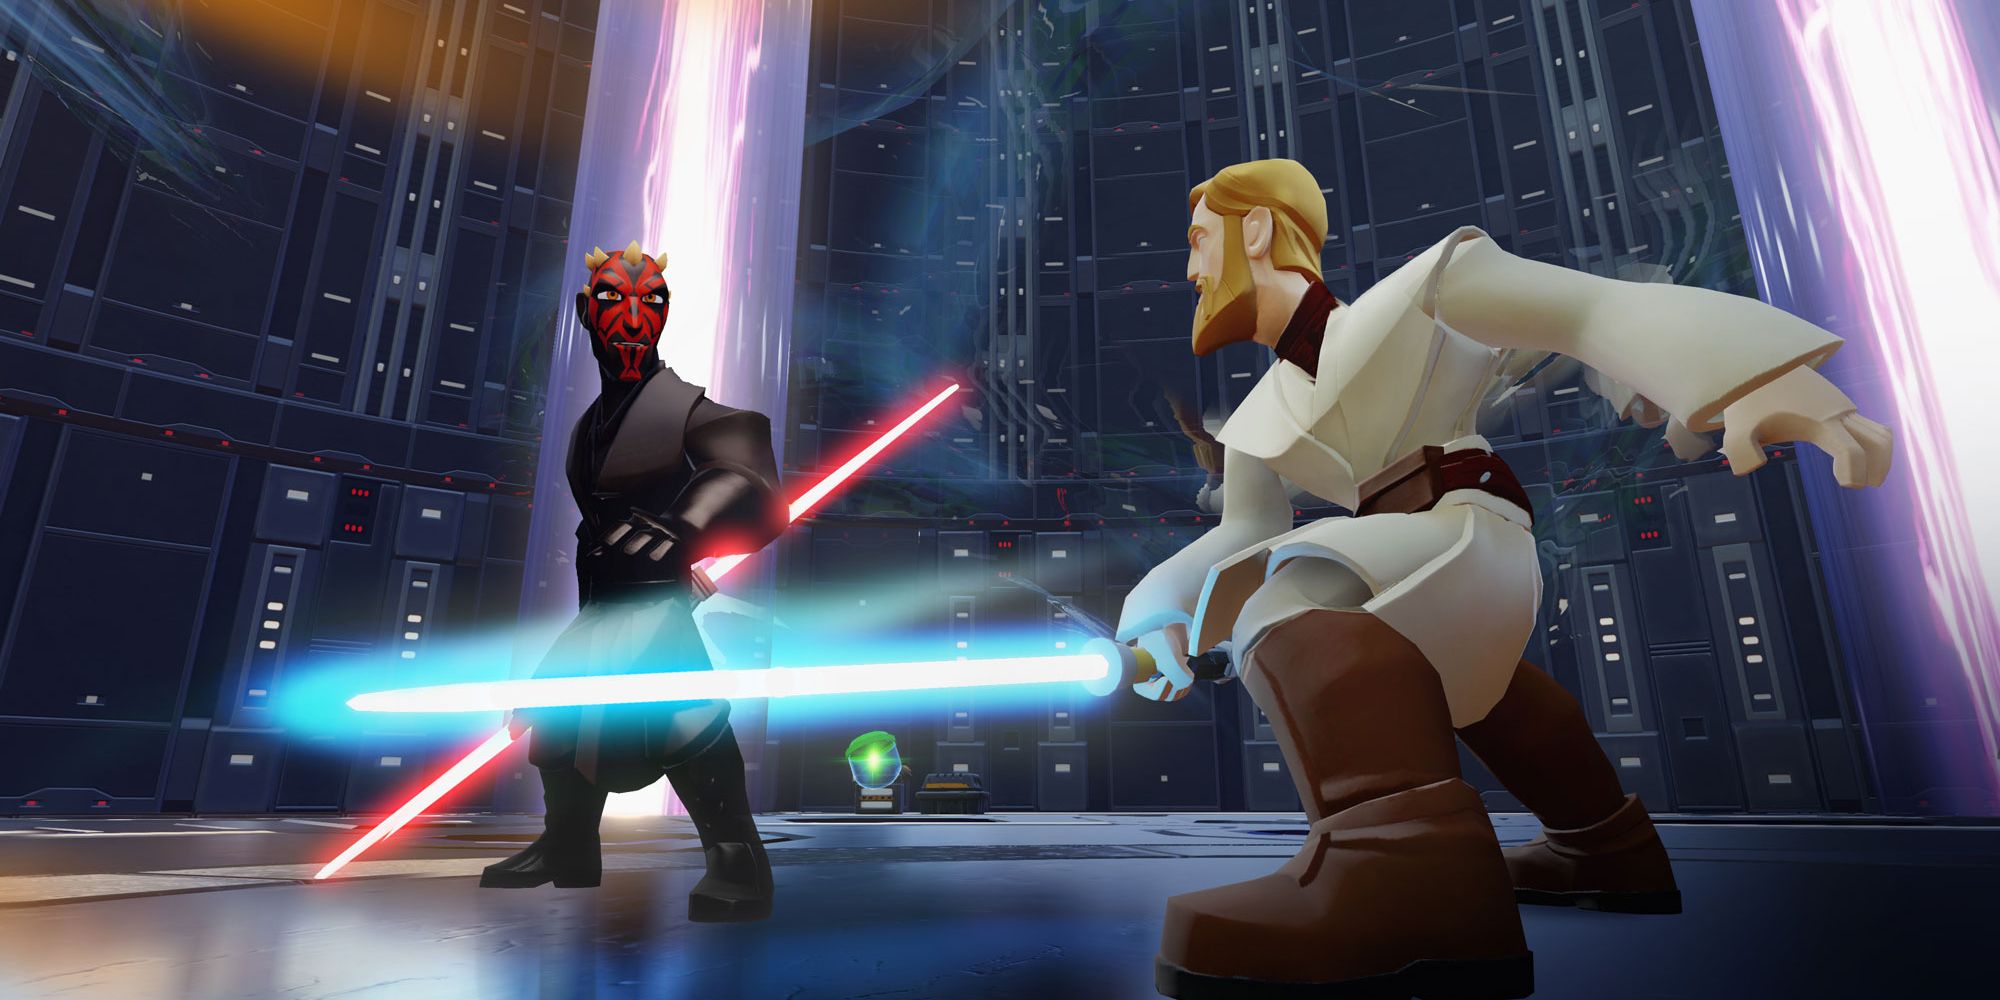 Obi Wan Kenobi fighting Darth Maul on Naboo in Disney Infinity 3.0 edition